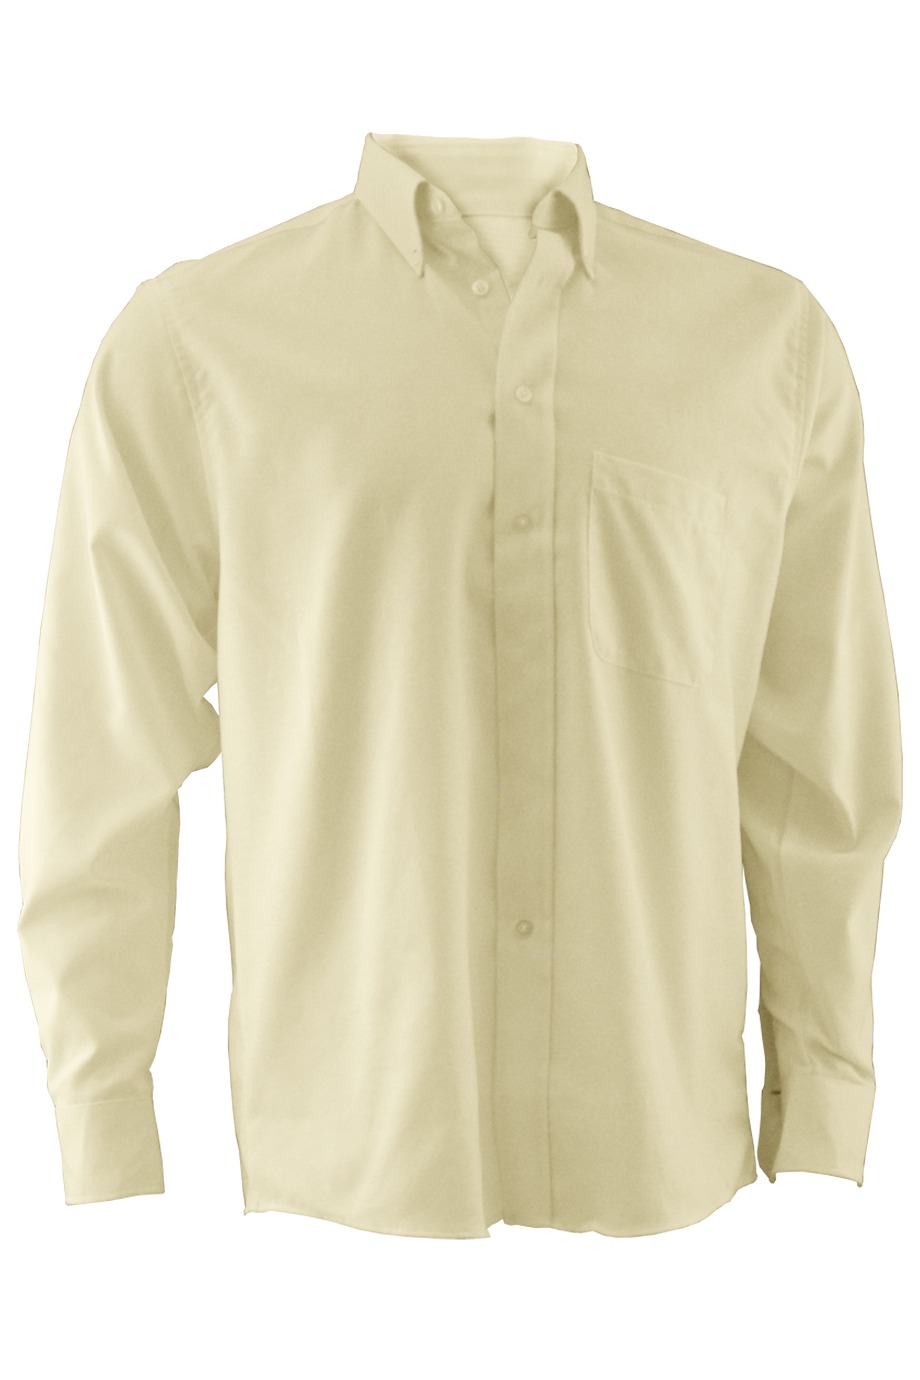 Edward's Men's Oxford Long Sleeve Shirt 